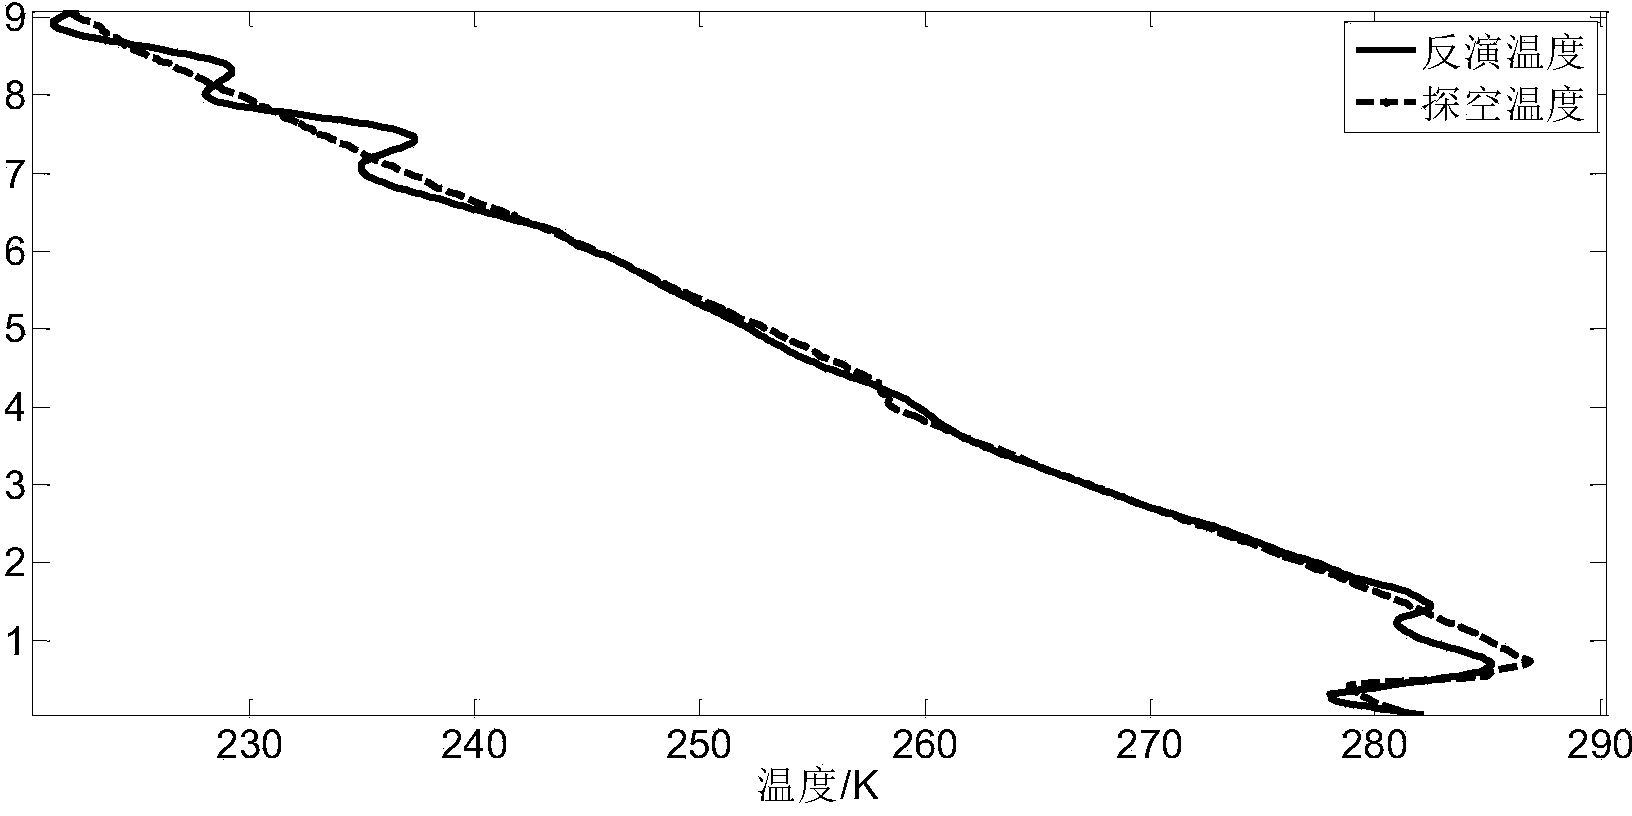 Saturation correction method for temperature measurement of pure rotational Raman lidar